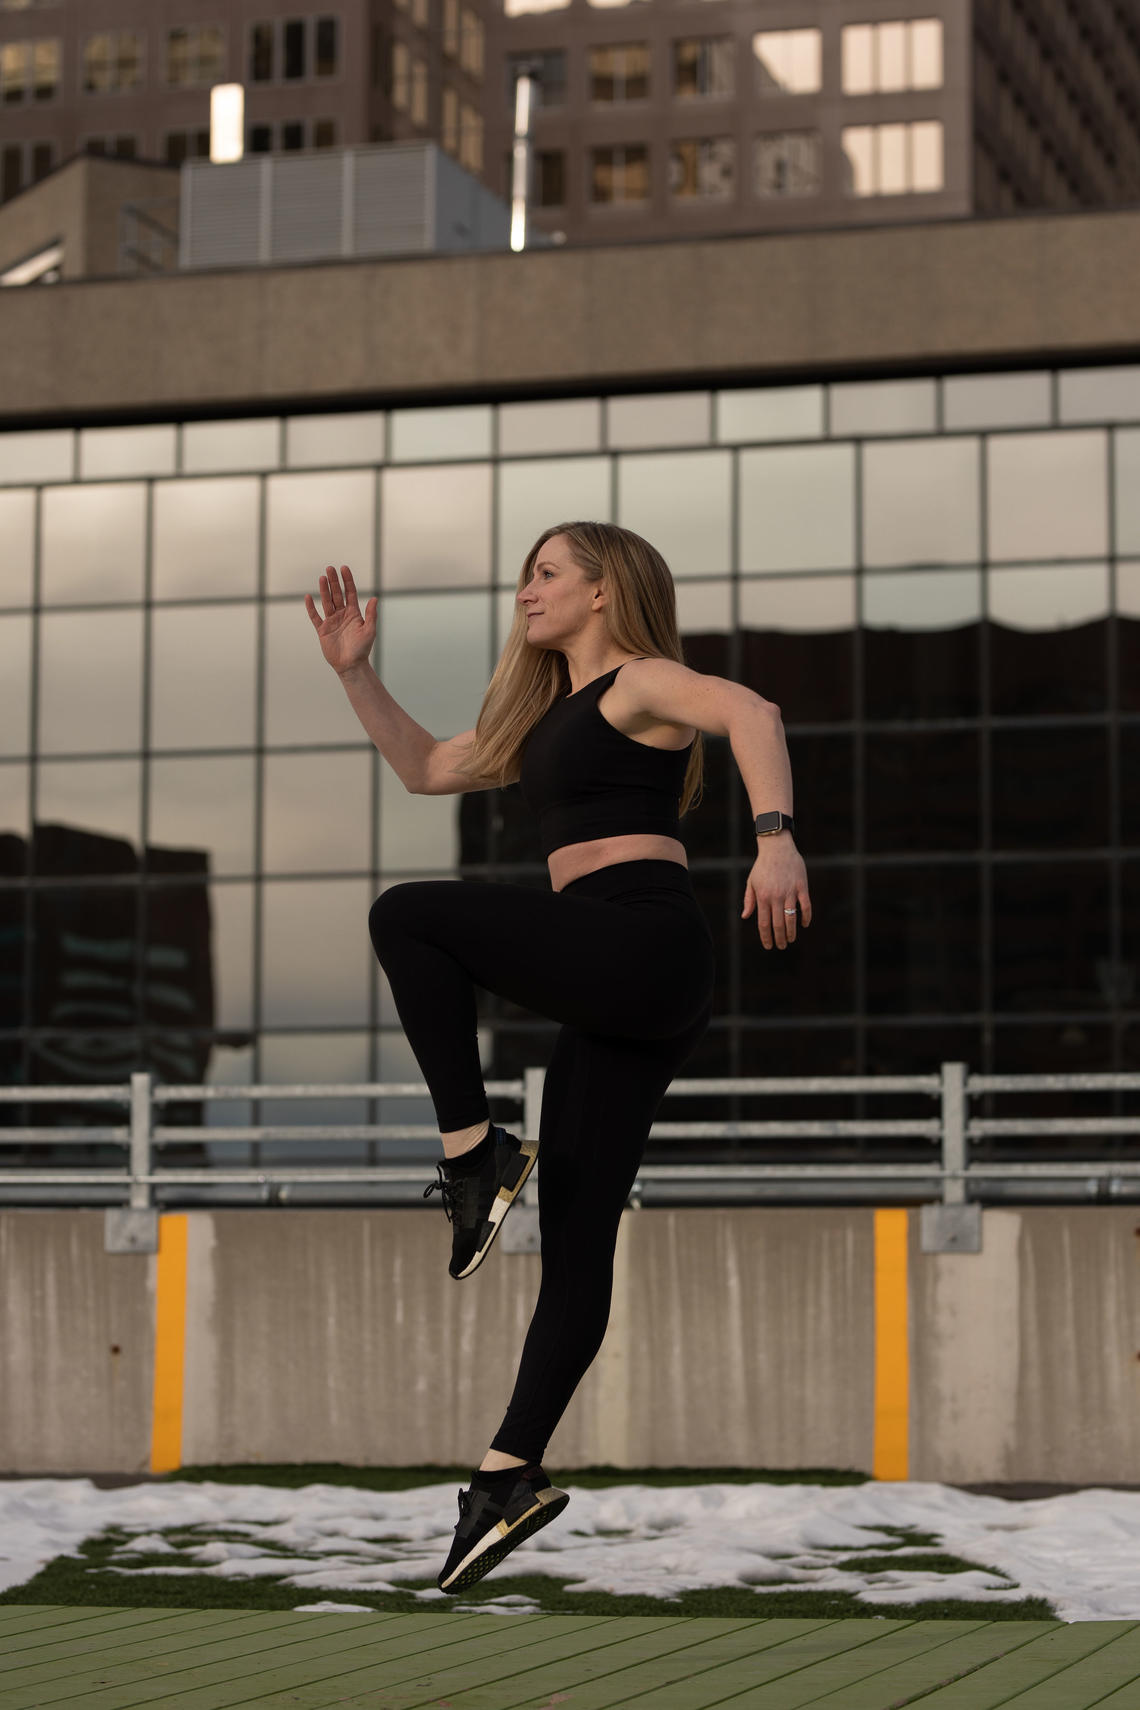 Jenn Varzari performs a single-leg hop on a rooftop in downtown Calgary